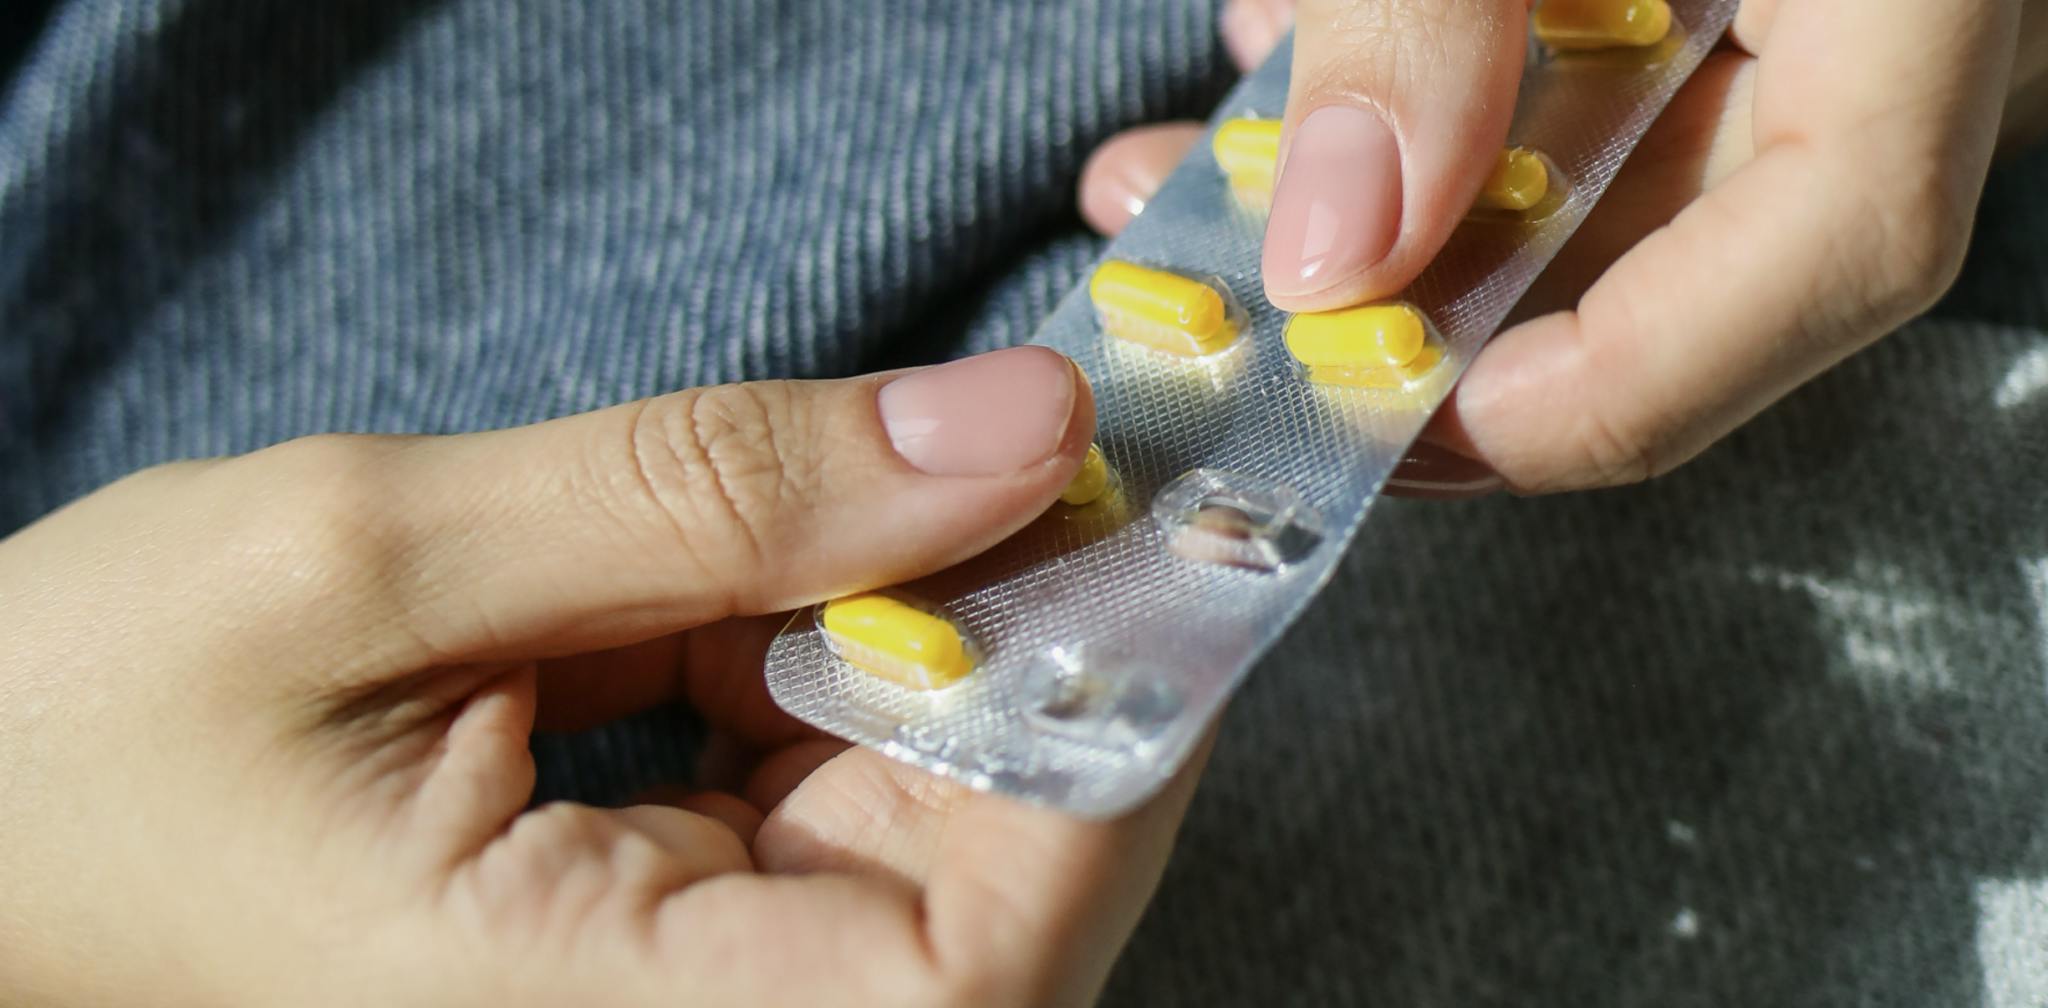 Antibiotics Contraindicated for Toxin Treatments